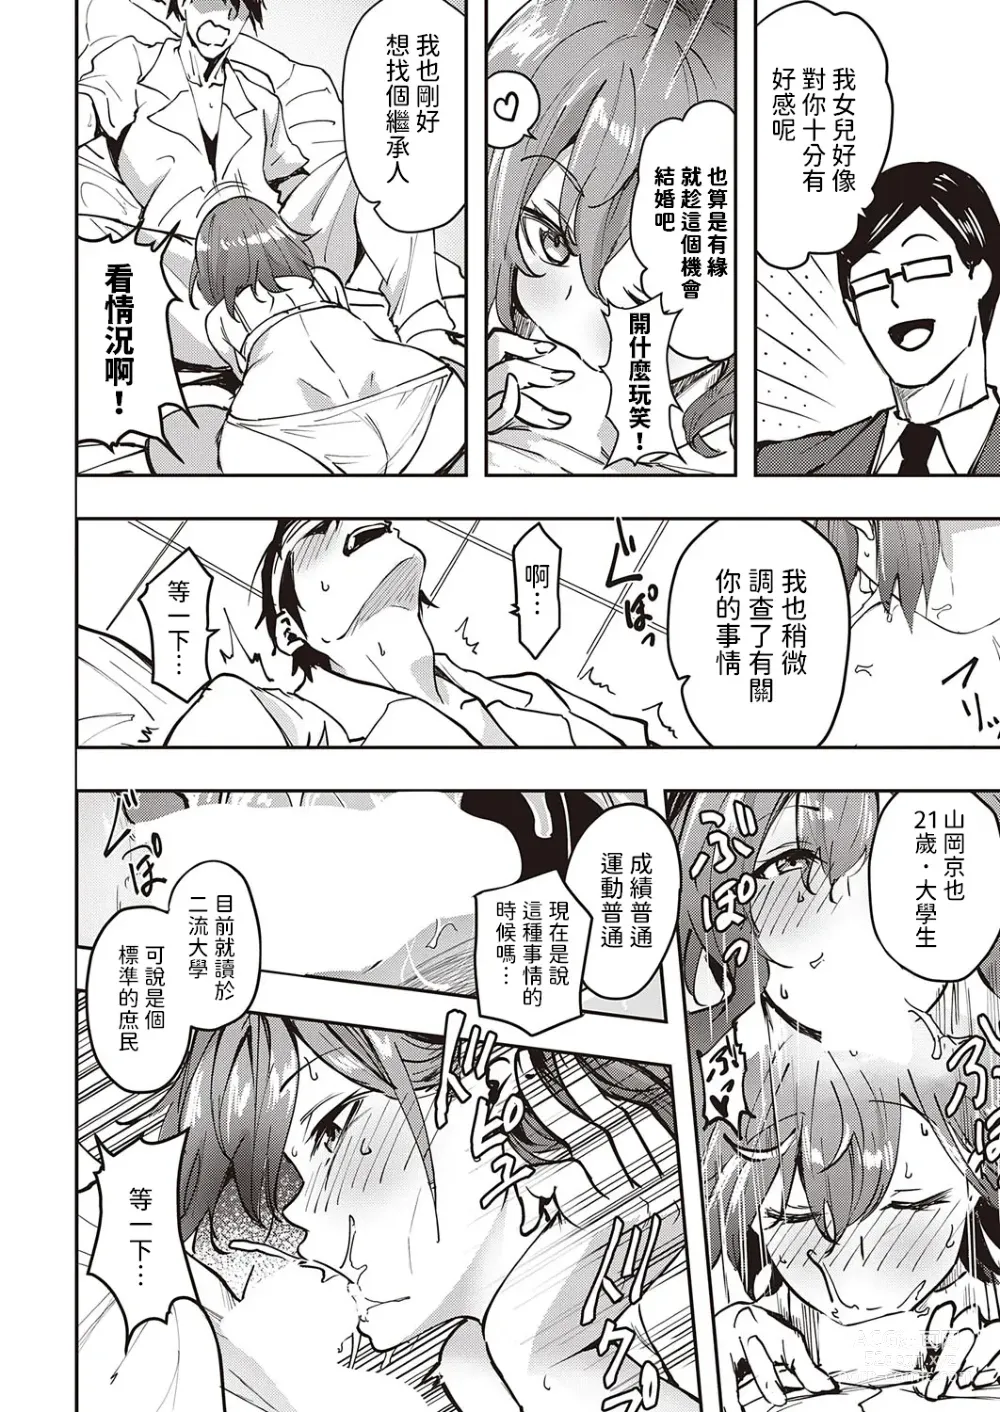 Page 4 of manga Hina no Ongaeshi